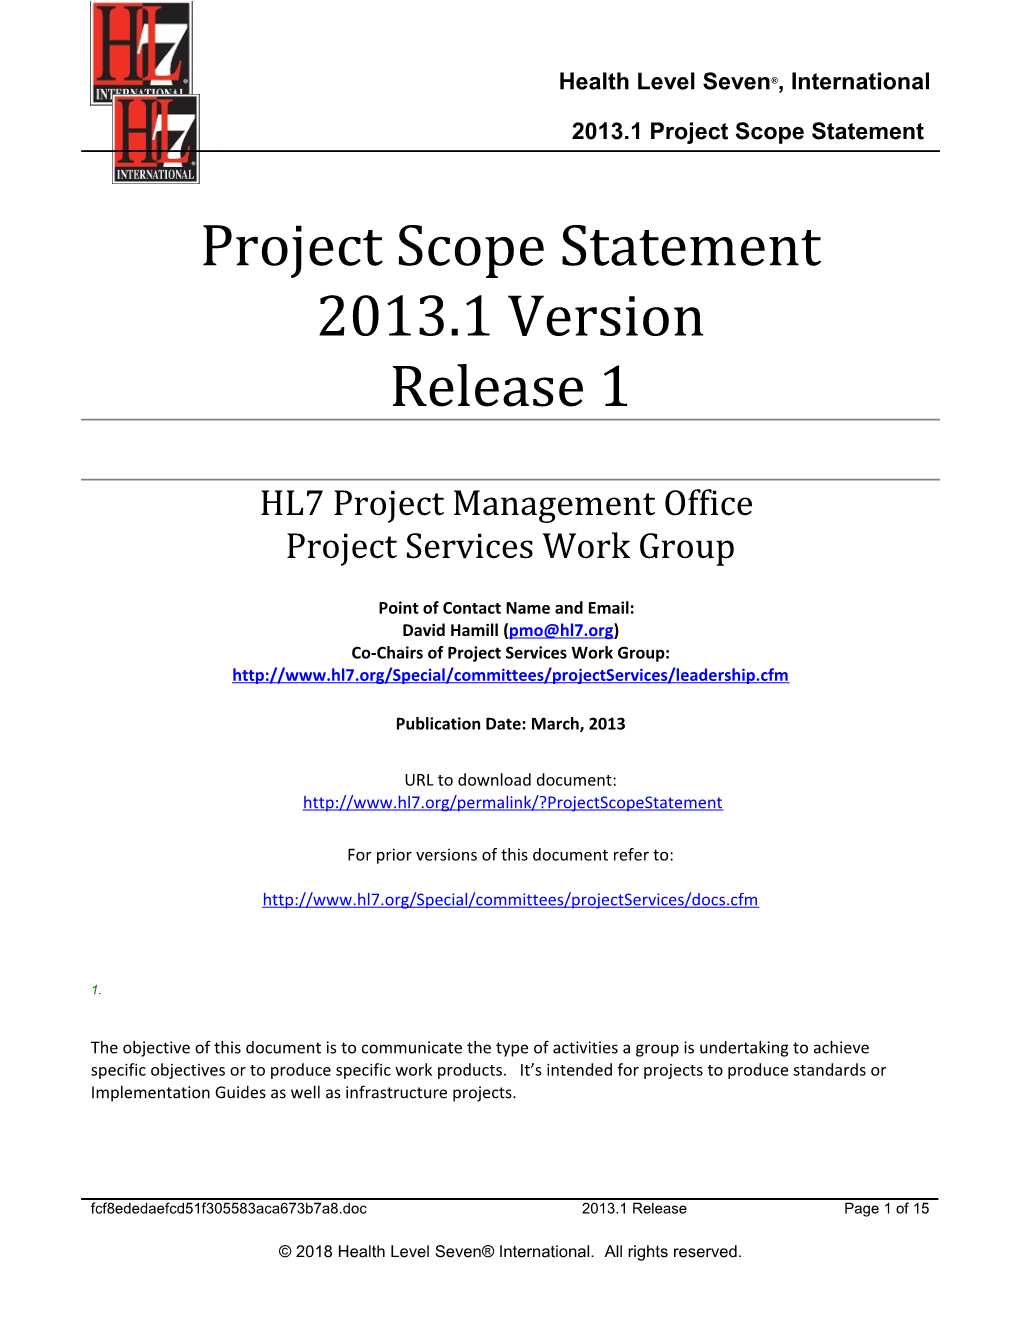 HL7 Project Scope Statement s7